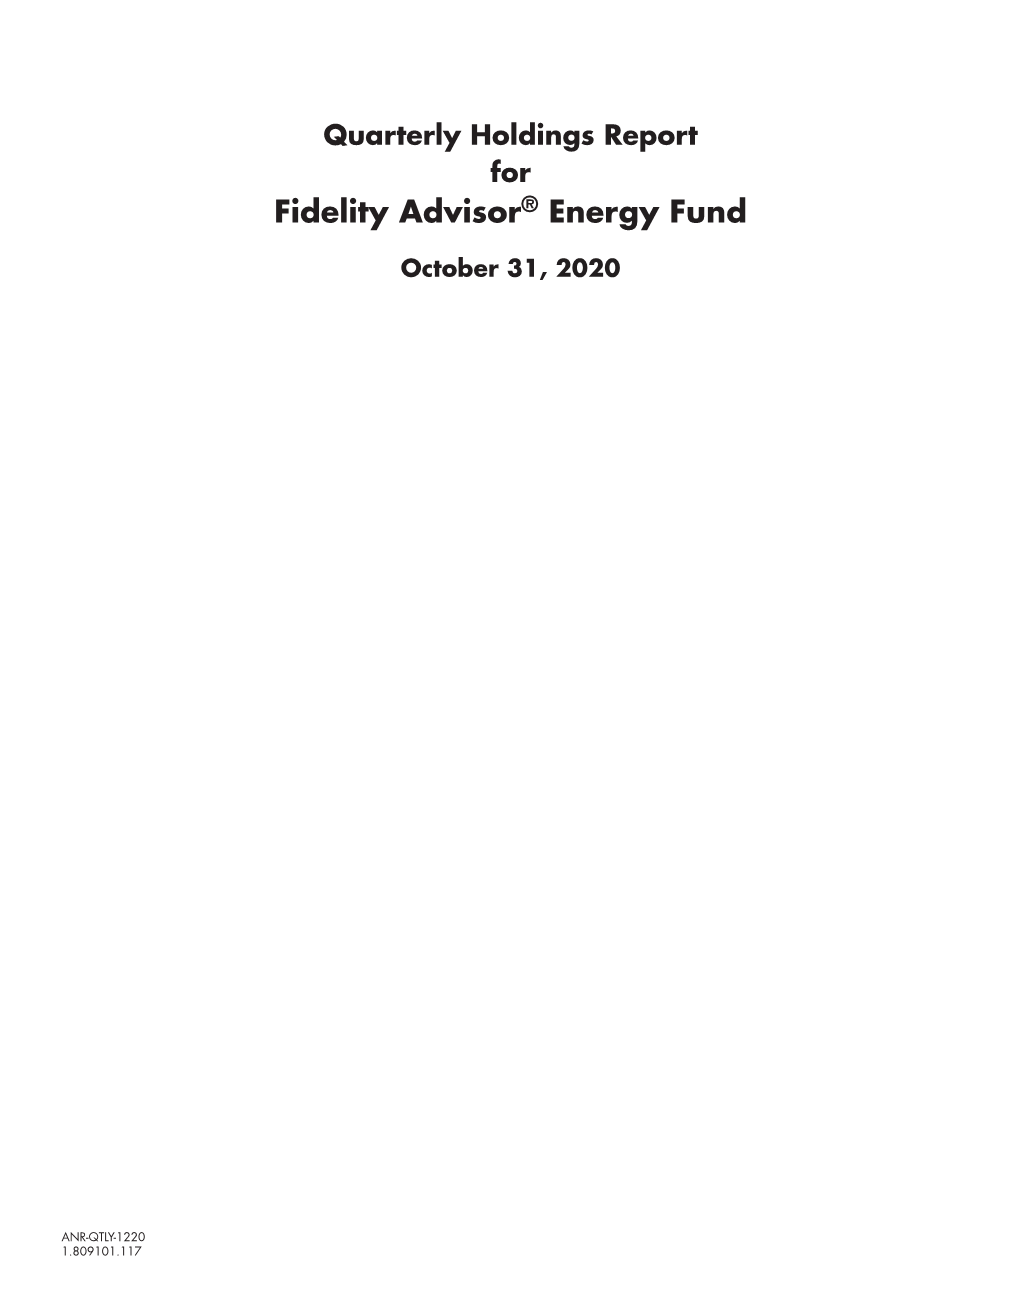 Fidelity Advisor® Energy Fund